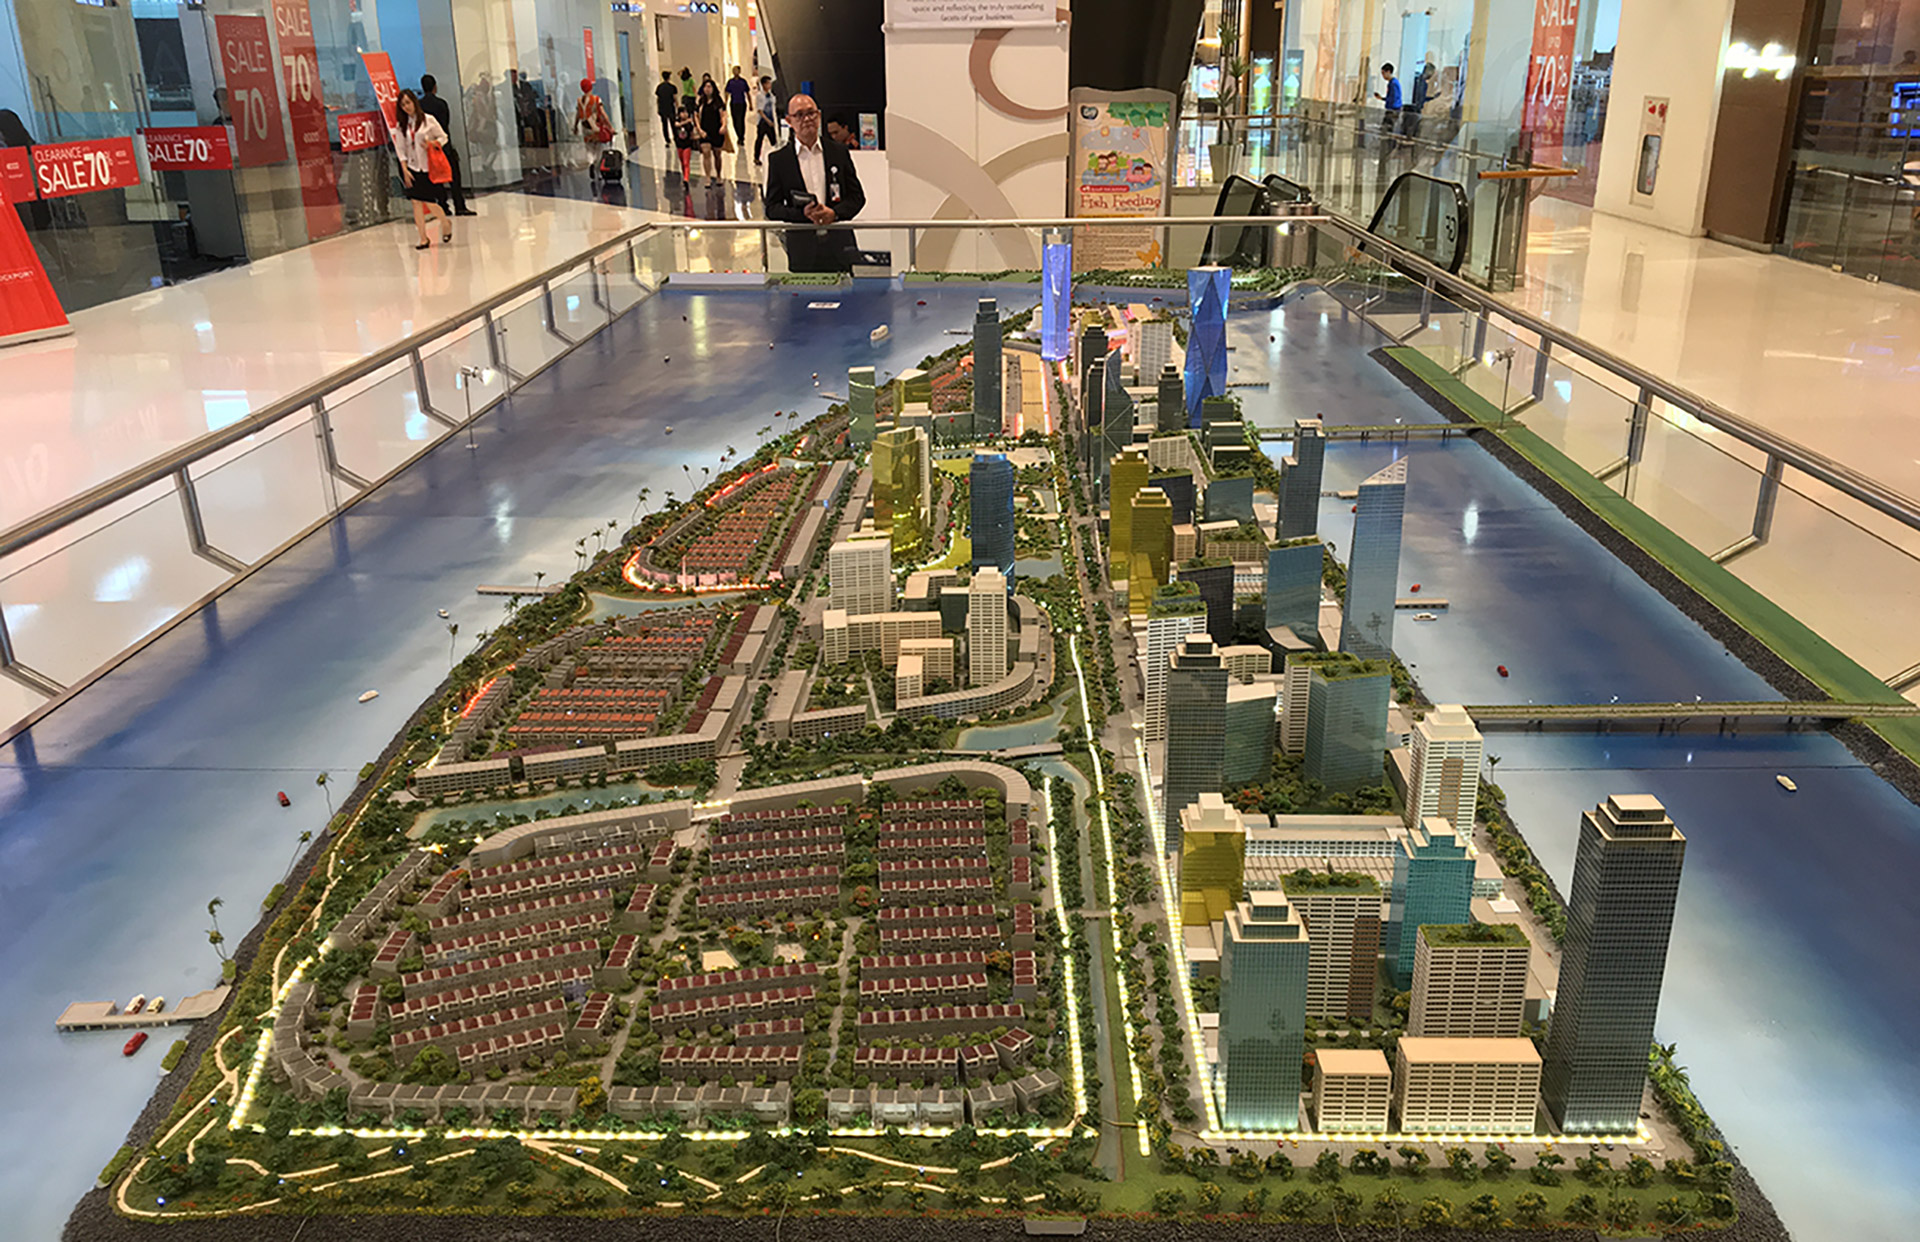 Sales Model of Pluit City inside Bay Walk mall, North Jakarta, Indonesia. Jan, 2016.